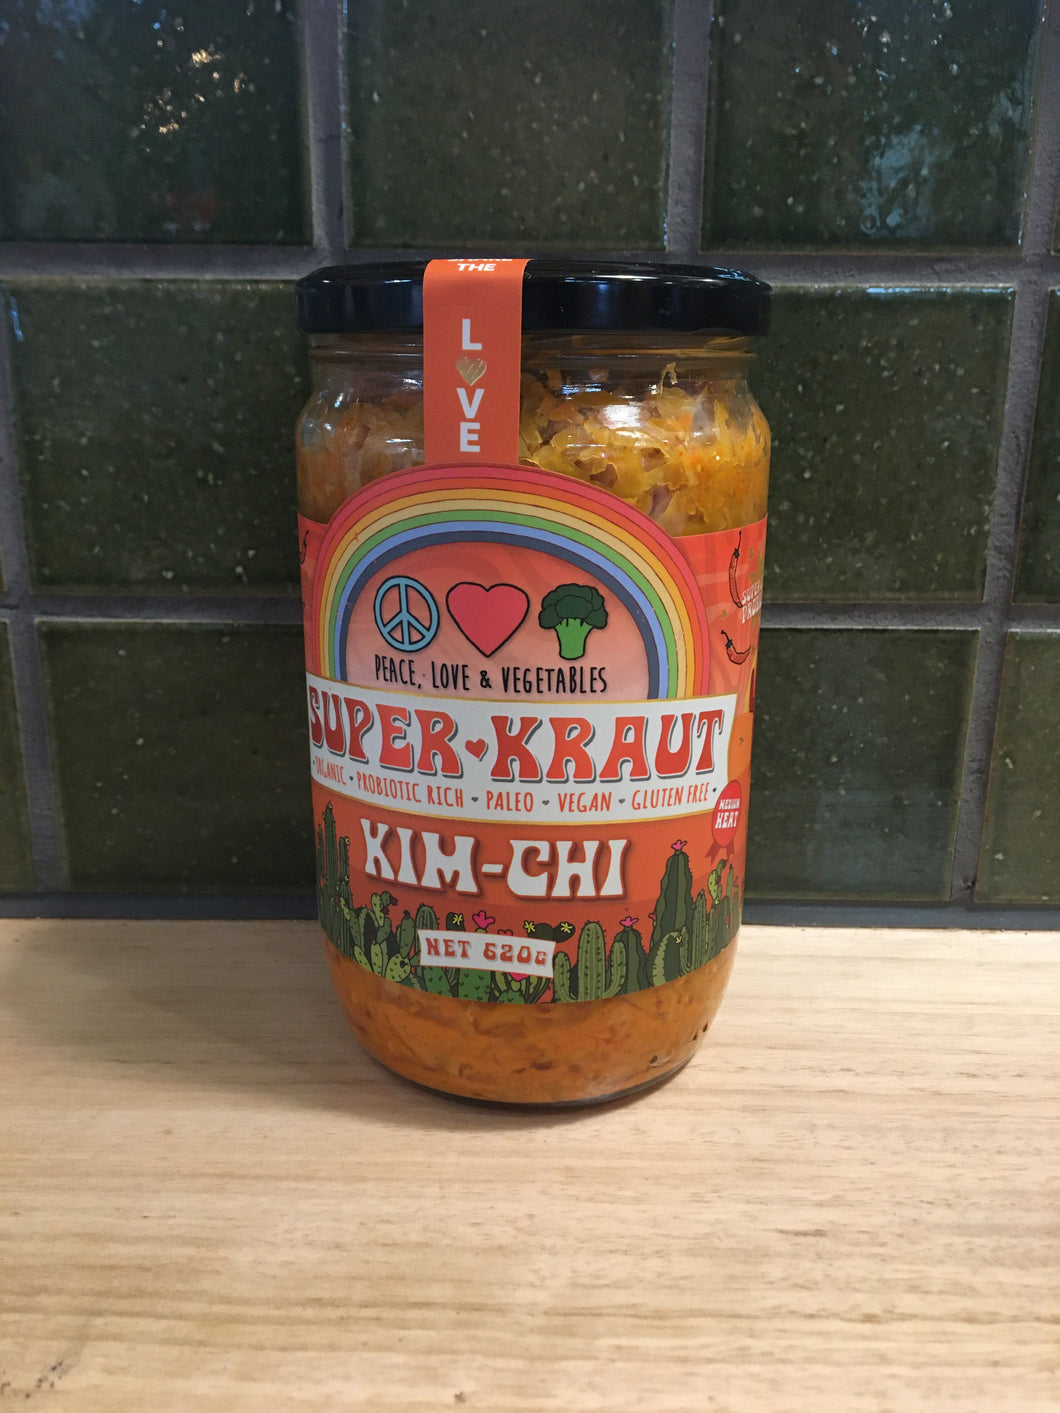 Peace Love & Vegetables Super Kraut Kim Chi 620g